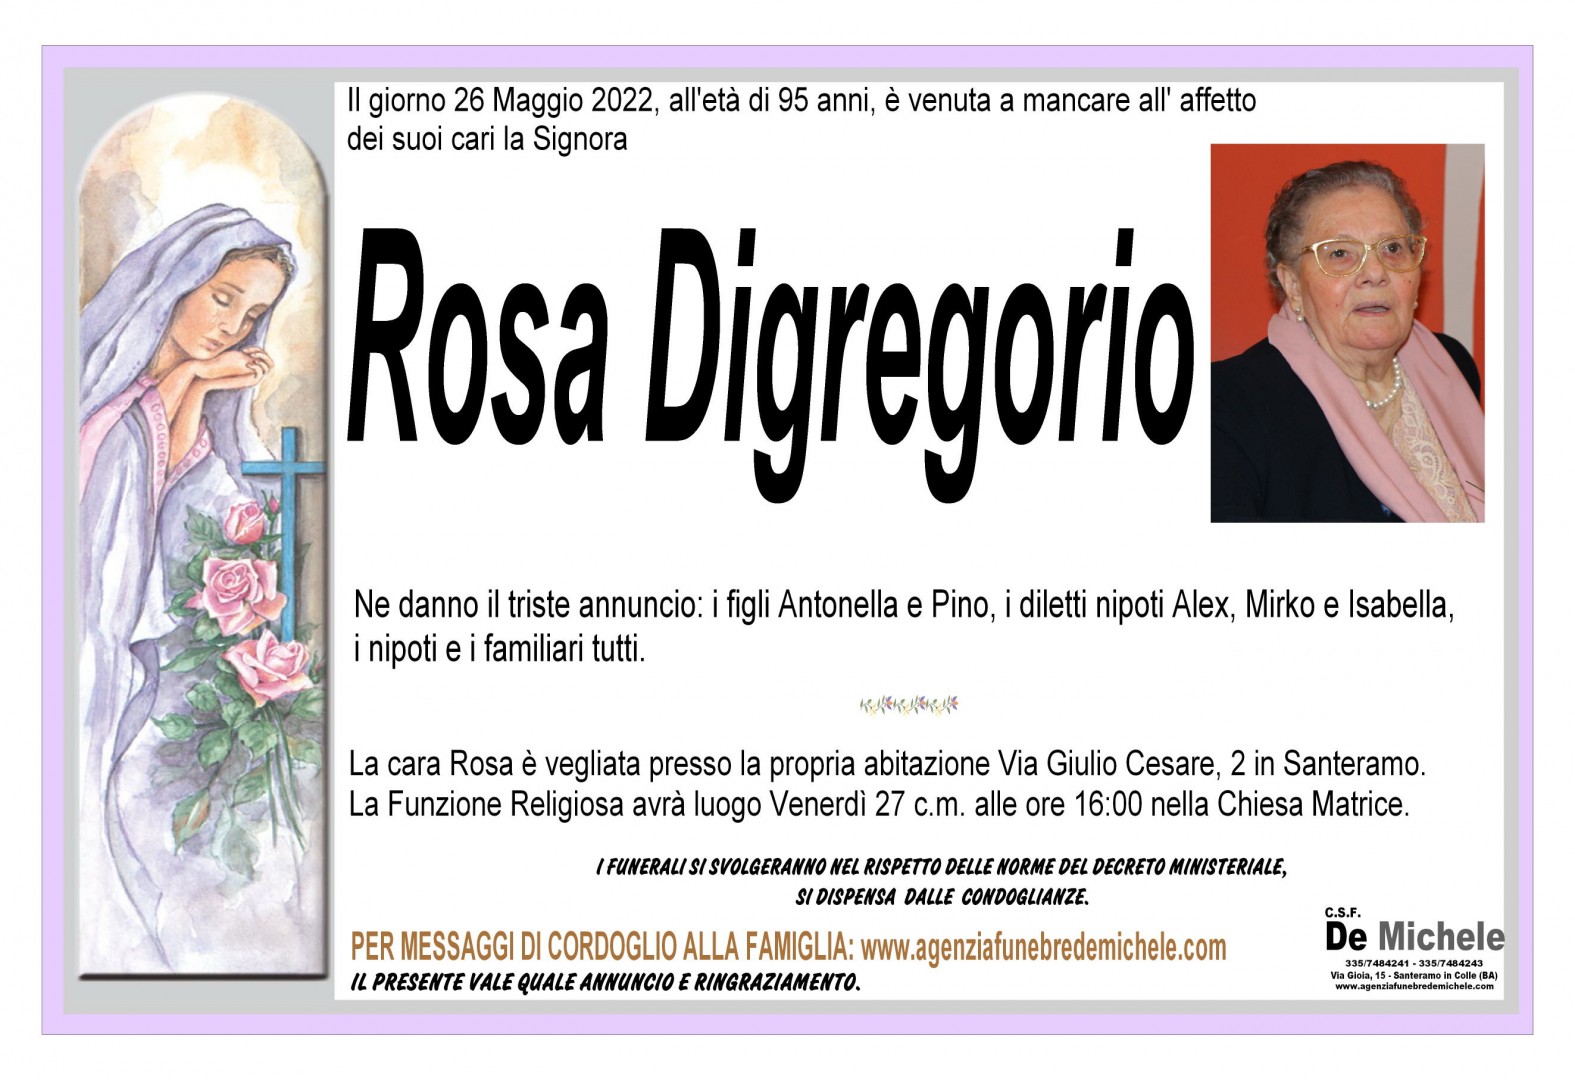 Rosa Digregorio